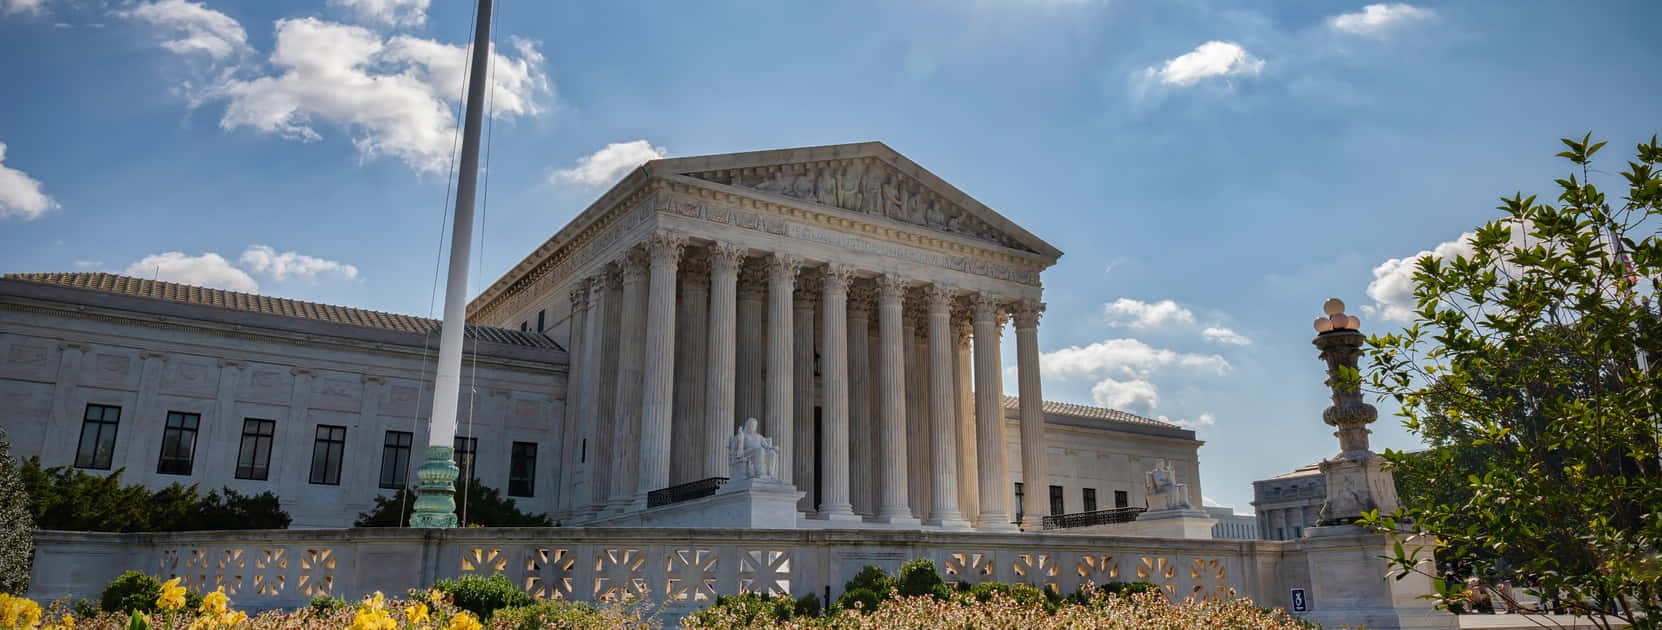 Supreme Court Building During Summer Wallpaper